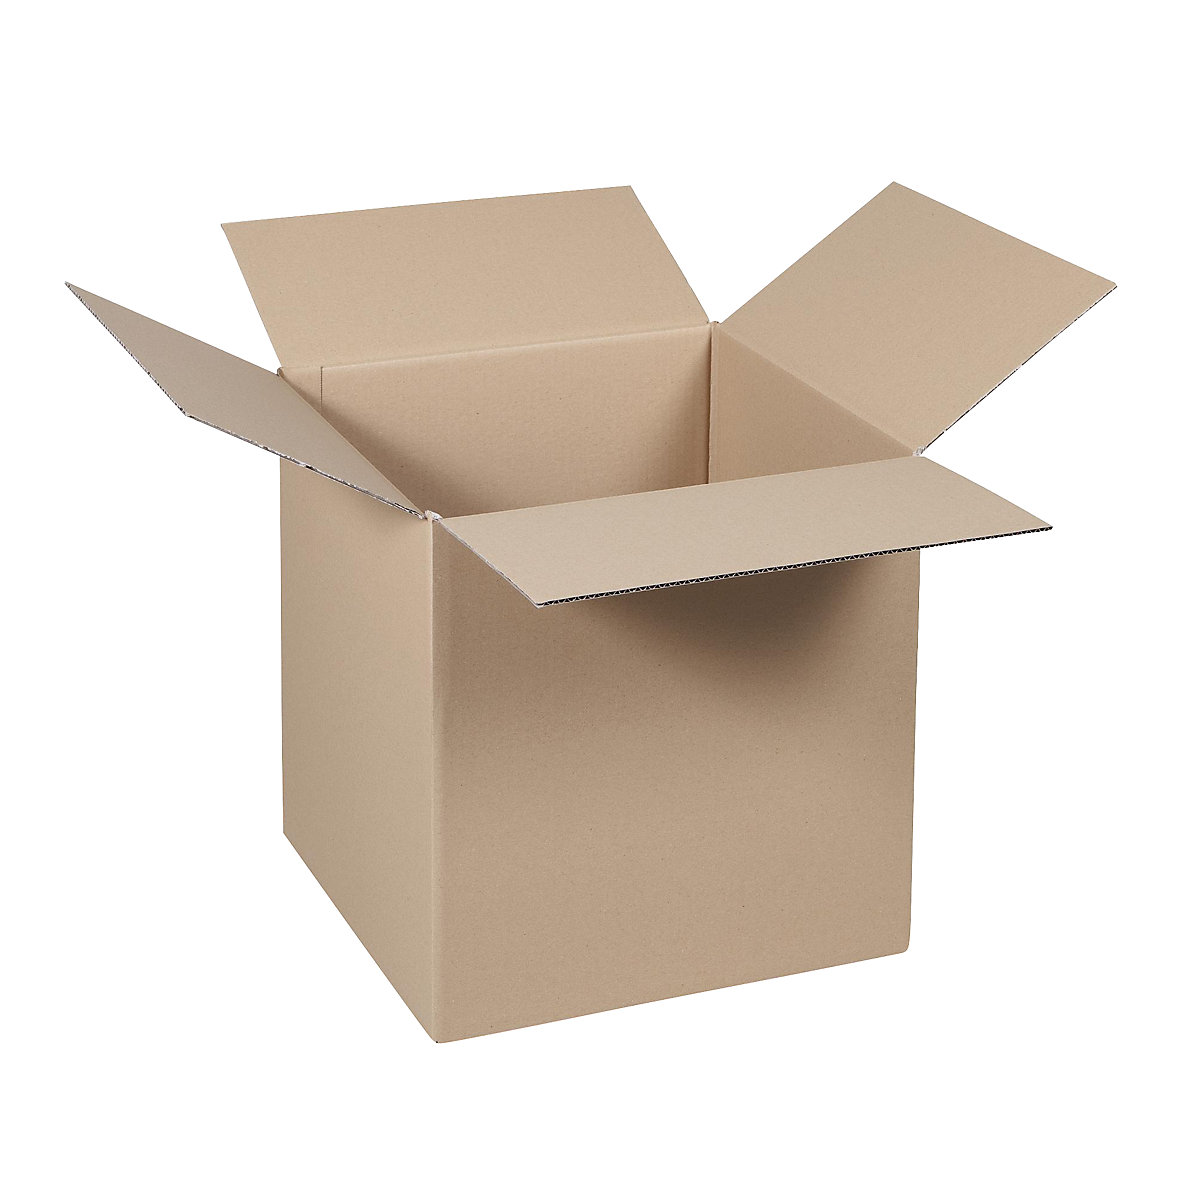 Folding cardboard box, FEFCO 0201, made of single fluted cardboard, internal dimensions 200 x 200 x 200 mm, pack of 50-32